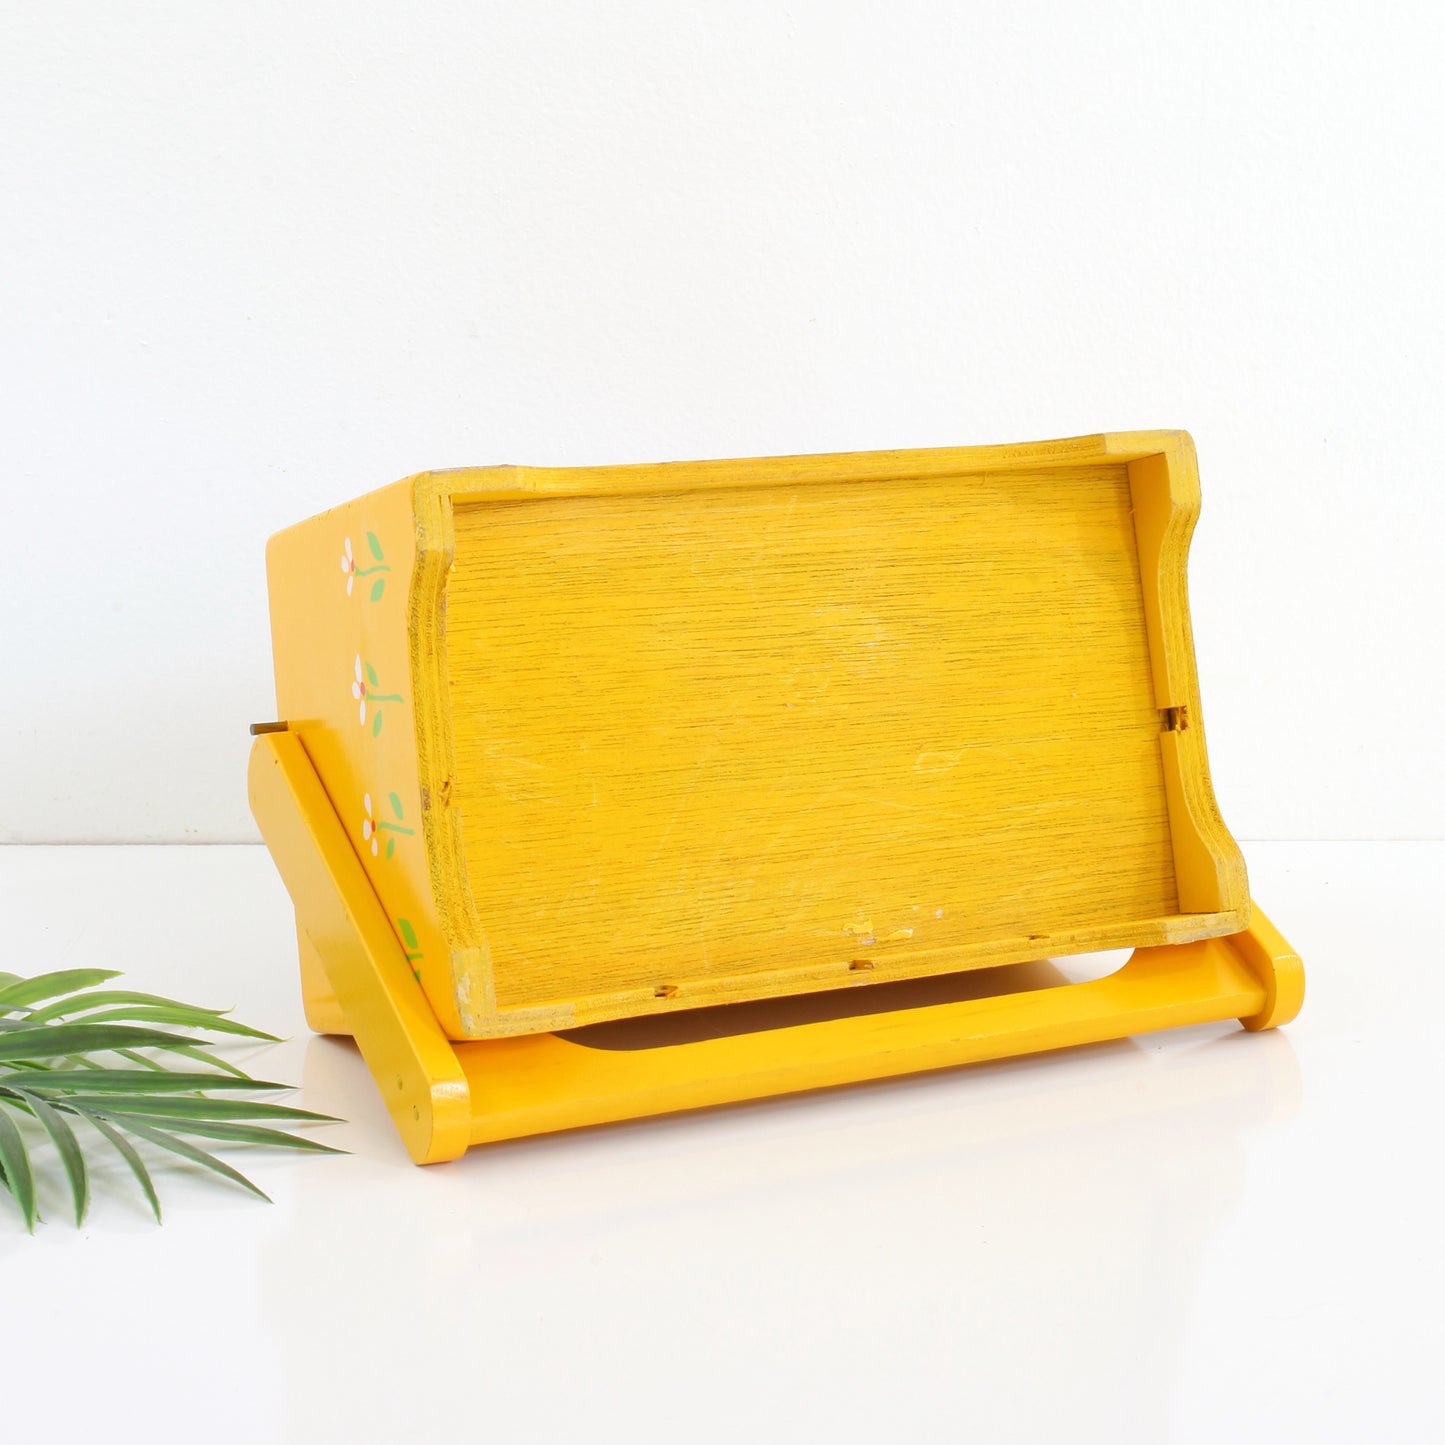 SOLD - Vintage Sunny Yellow Wood Organizer